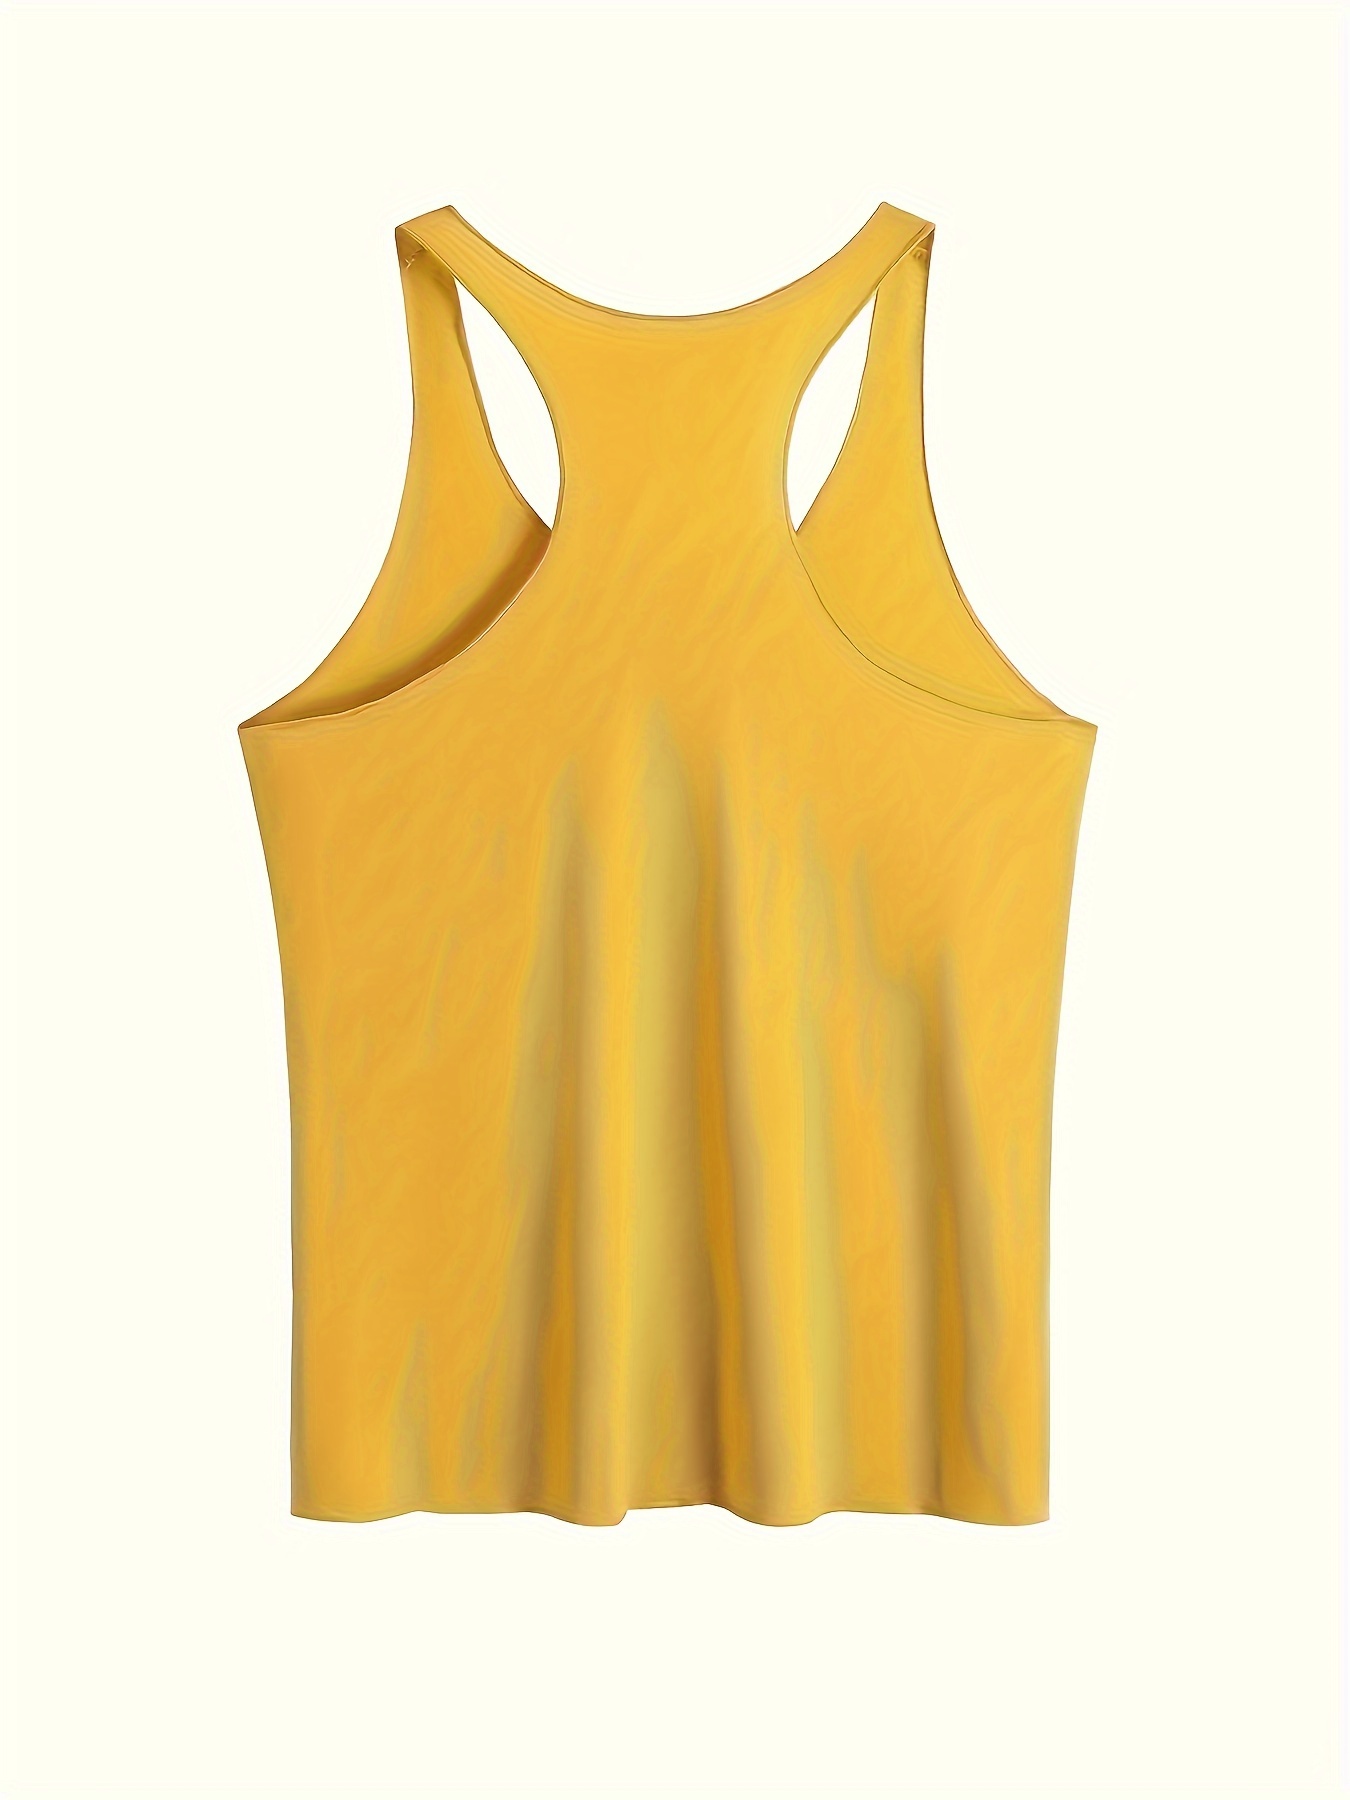 Yoga Vest Zumba Wear Women Gym Loose Sports Tank Top Sleeveless